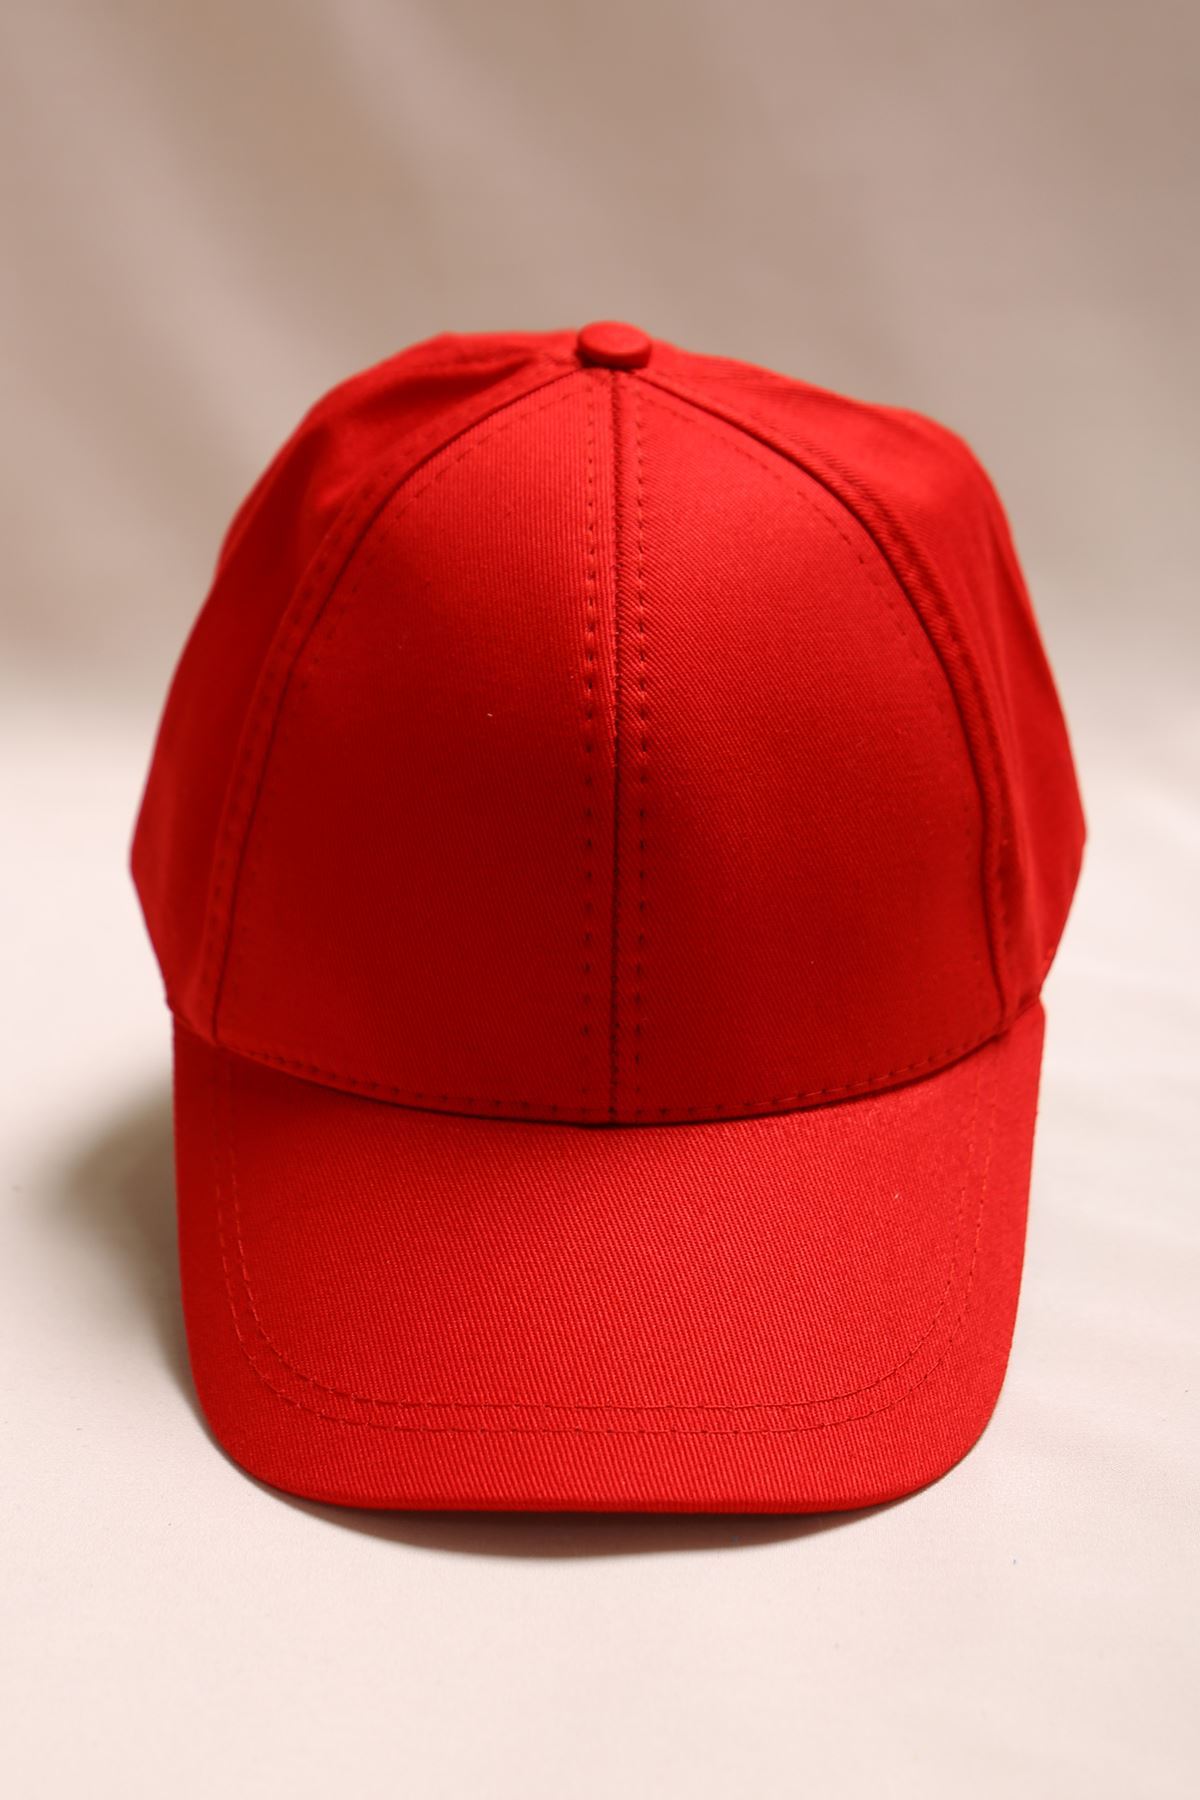 CLZ275 Spor Şapka Kırmızı